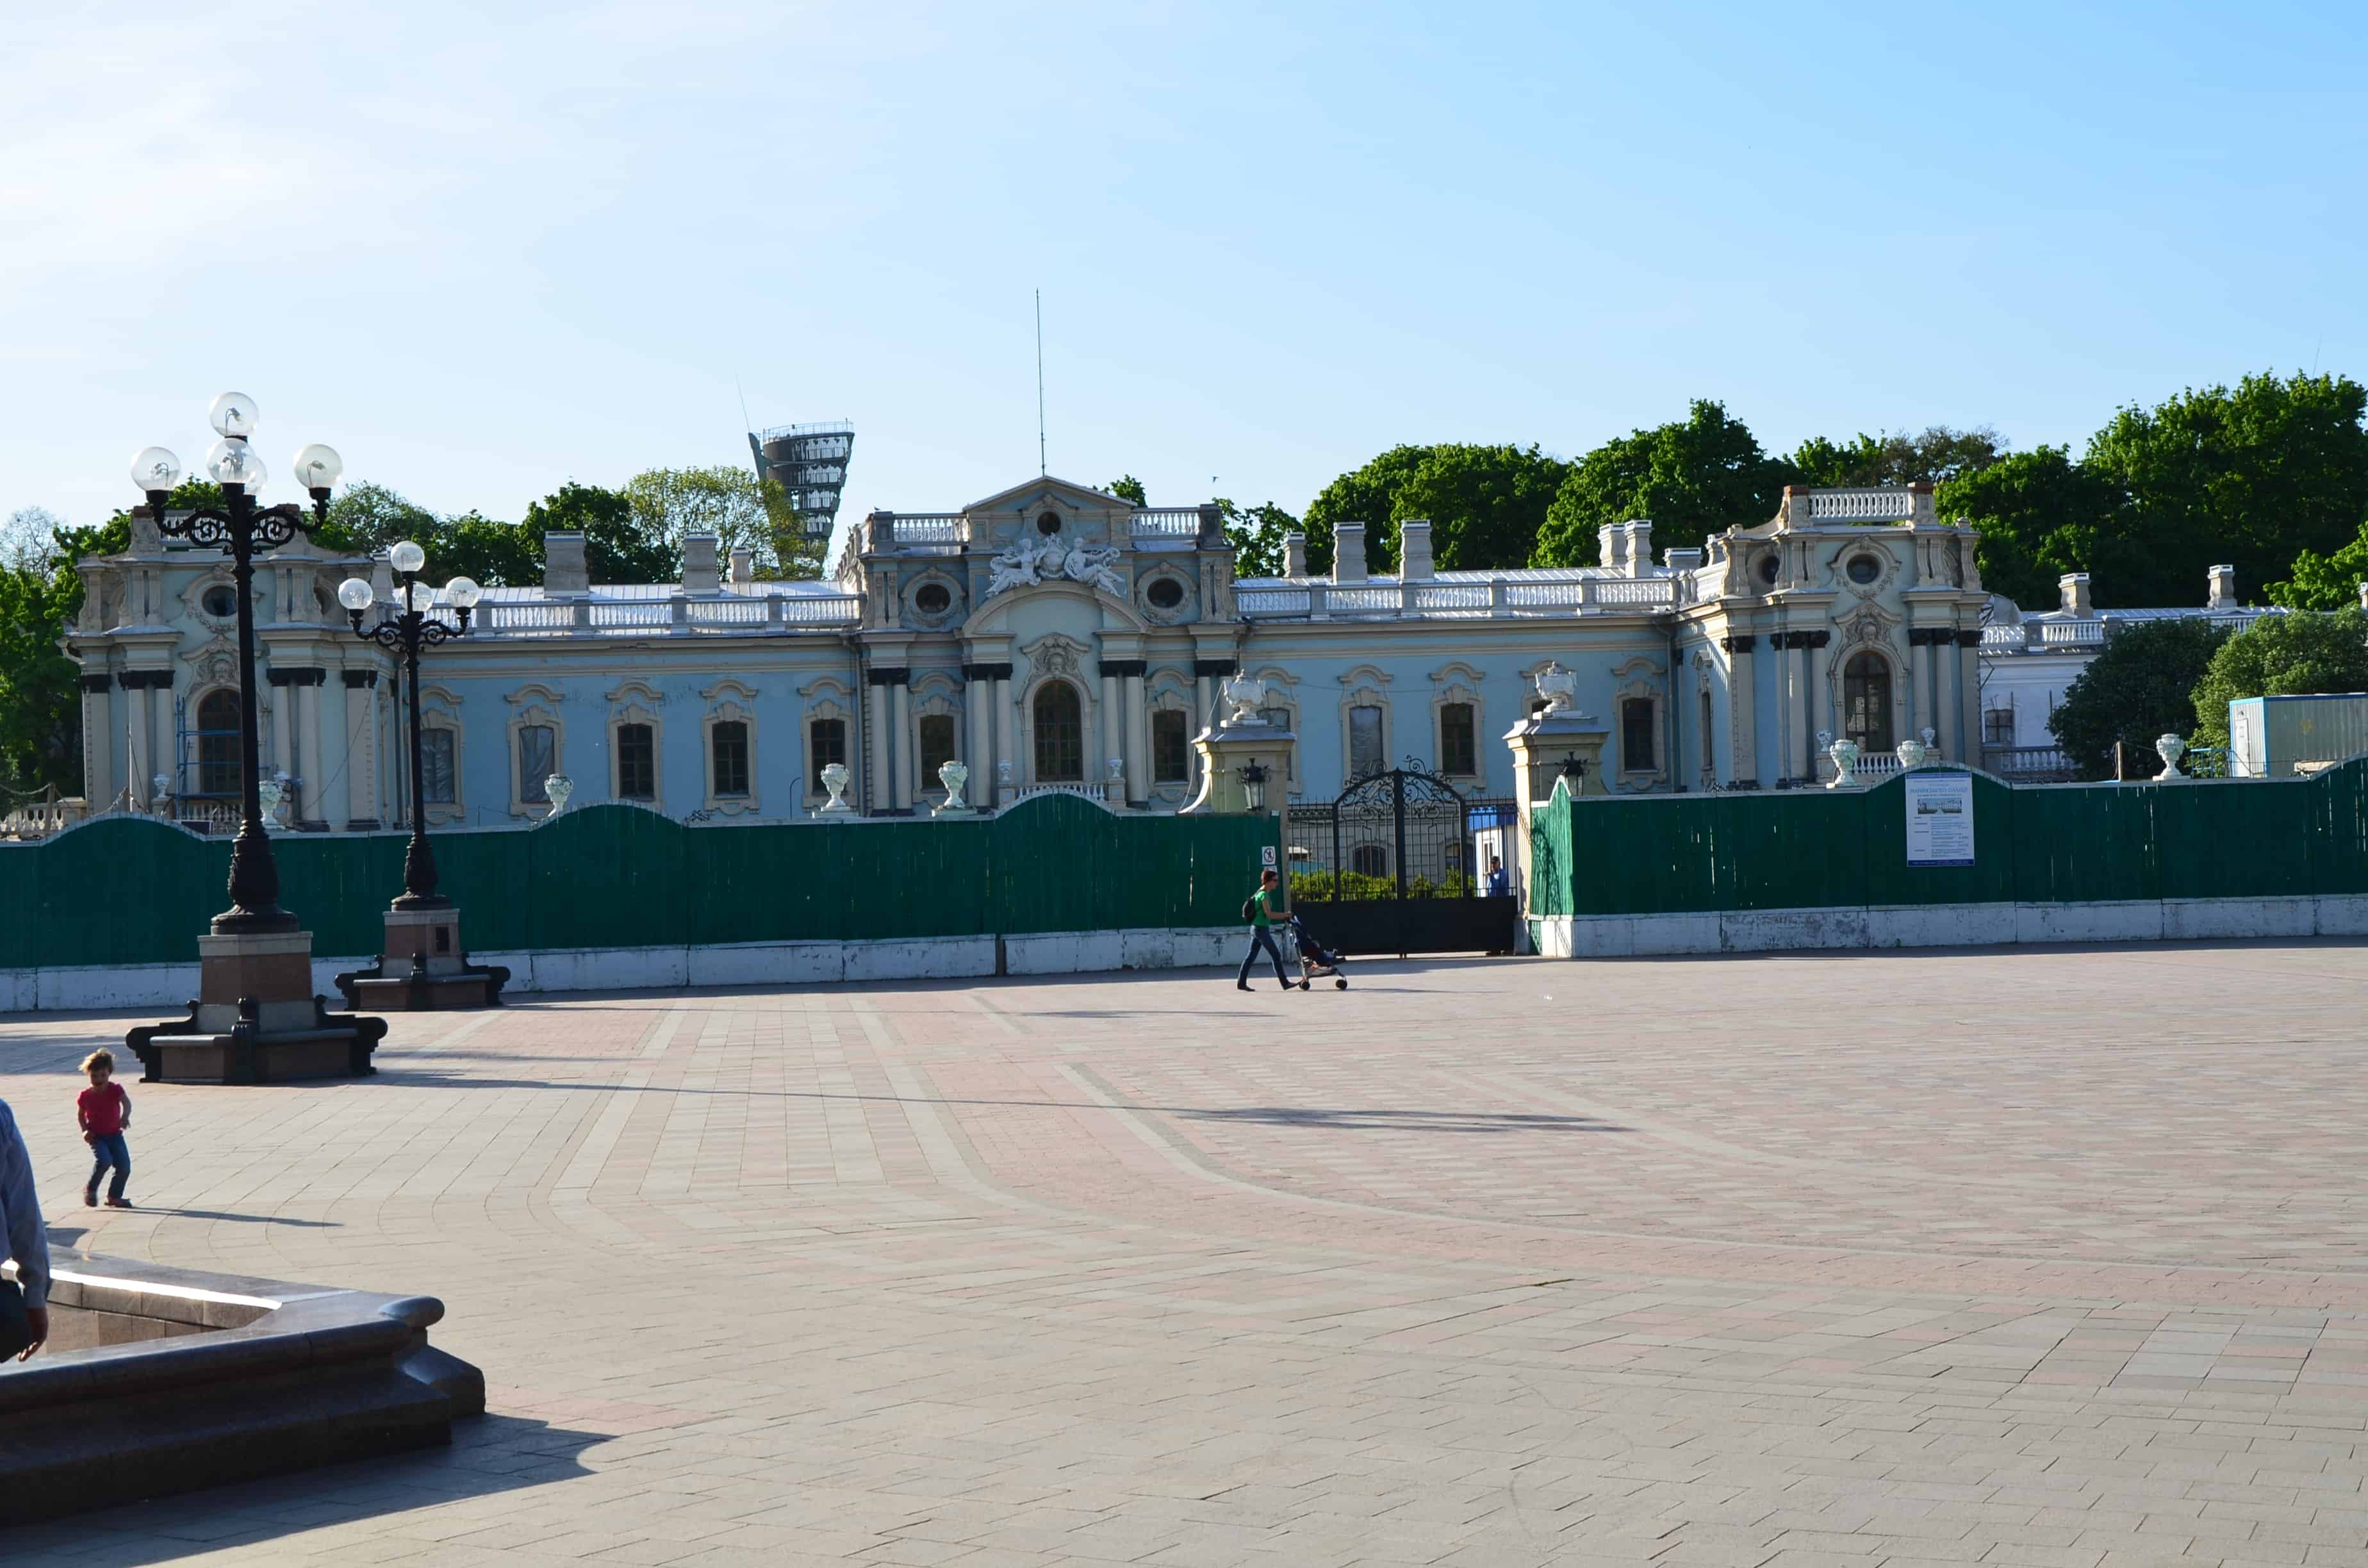 Mariyinsky Palace in Mariyinskyi Park, Kyiv, Ukraine